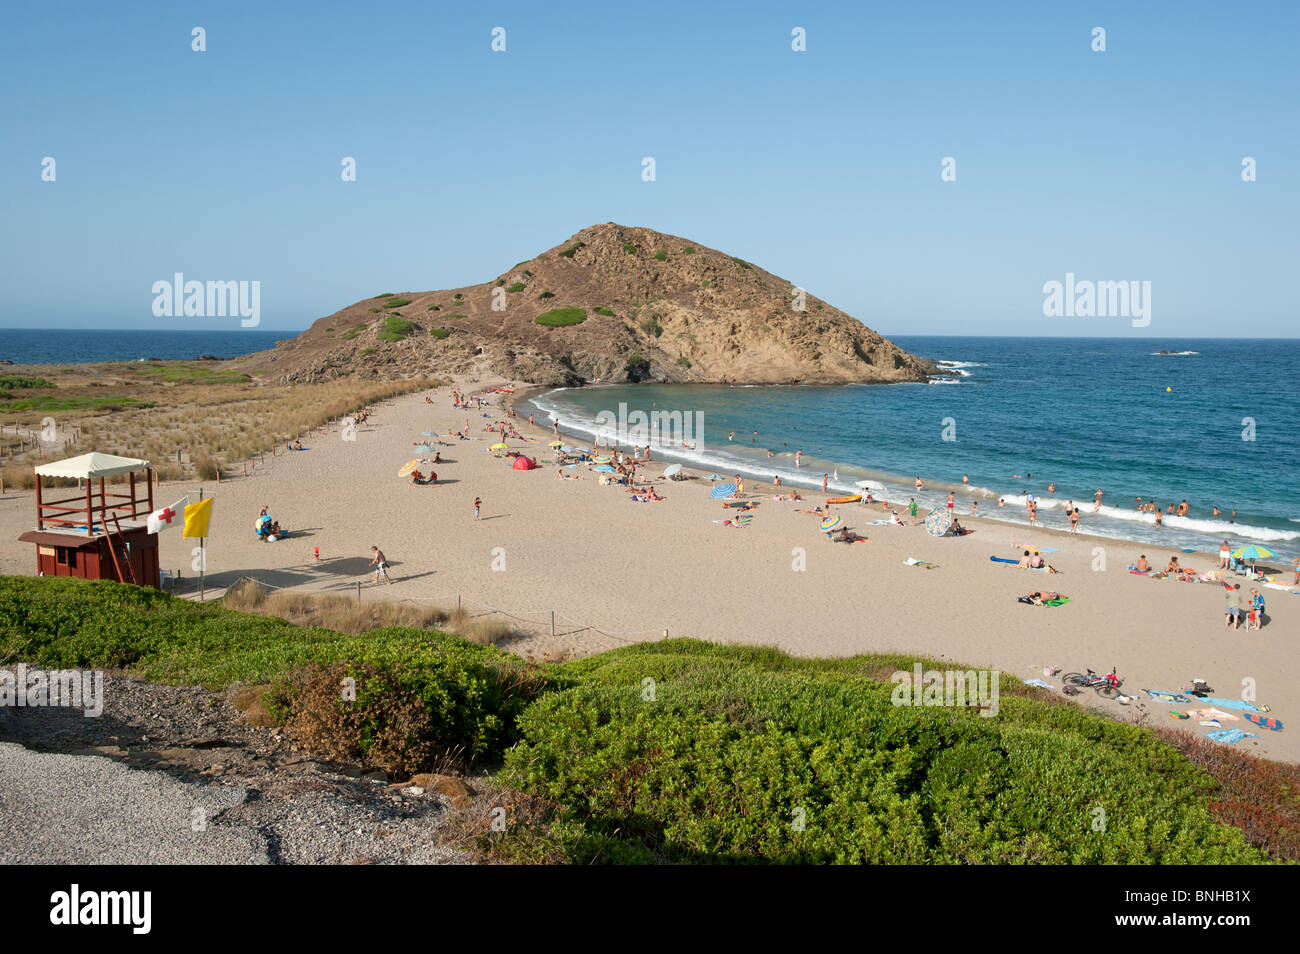 Tourists bathe on the beach at Cala Mesquida Menorca Spain Stock Photo